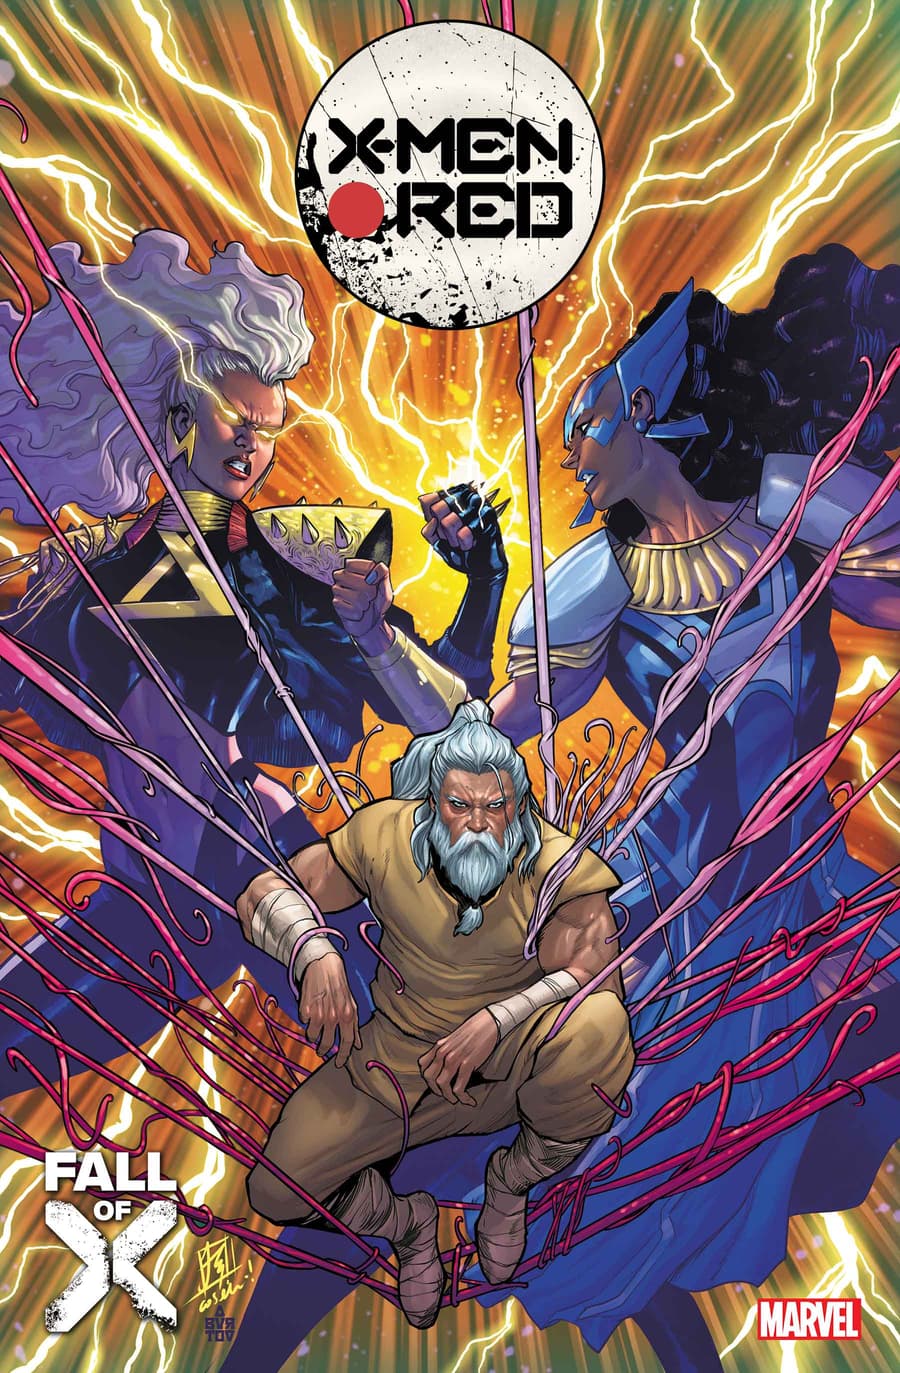 X-Men - Fall of X - X-Men Red #15 - Blog Farofeiros